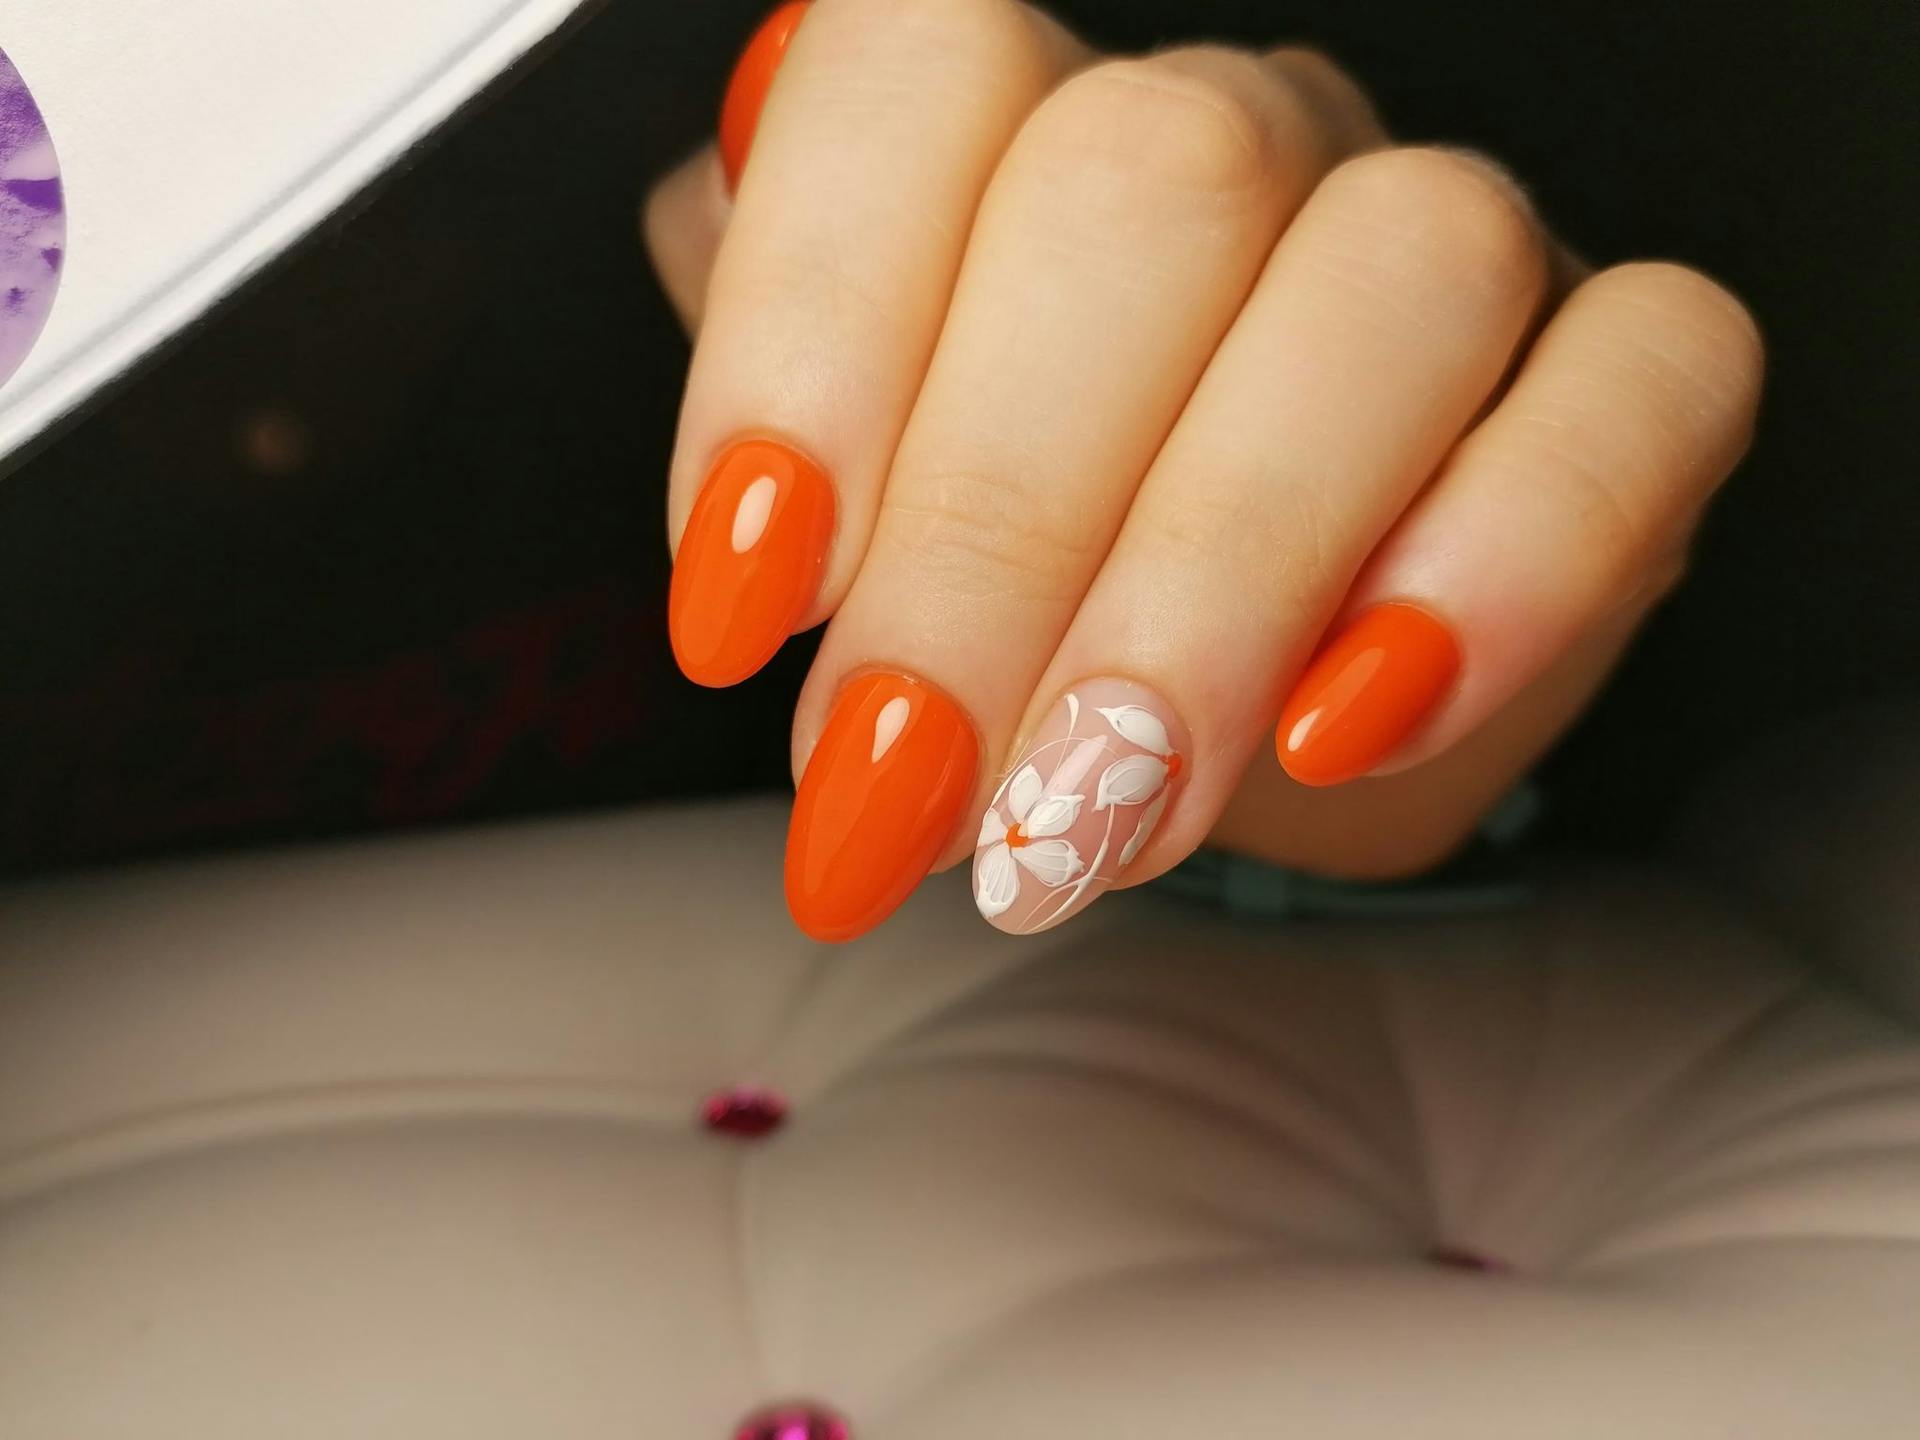 almond nails / radiant orange with white flowers design  